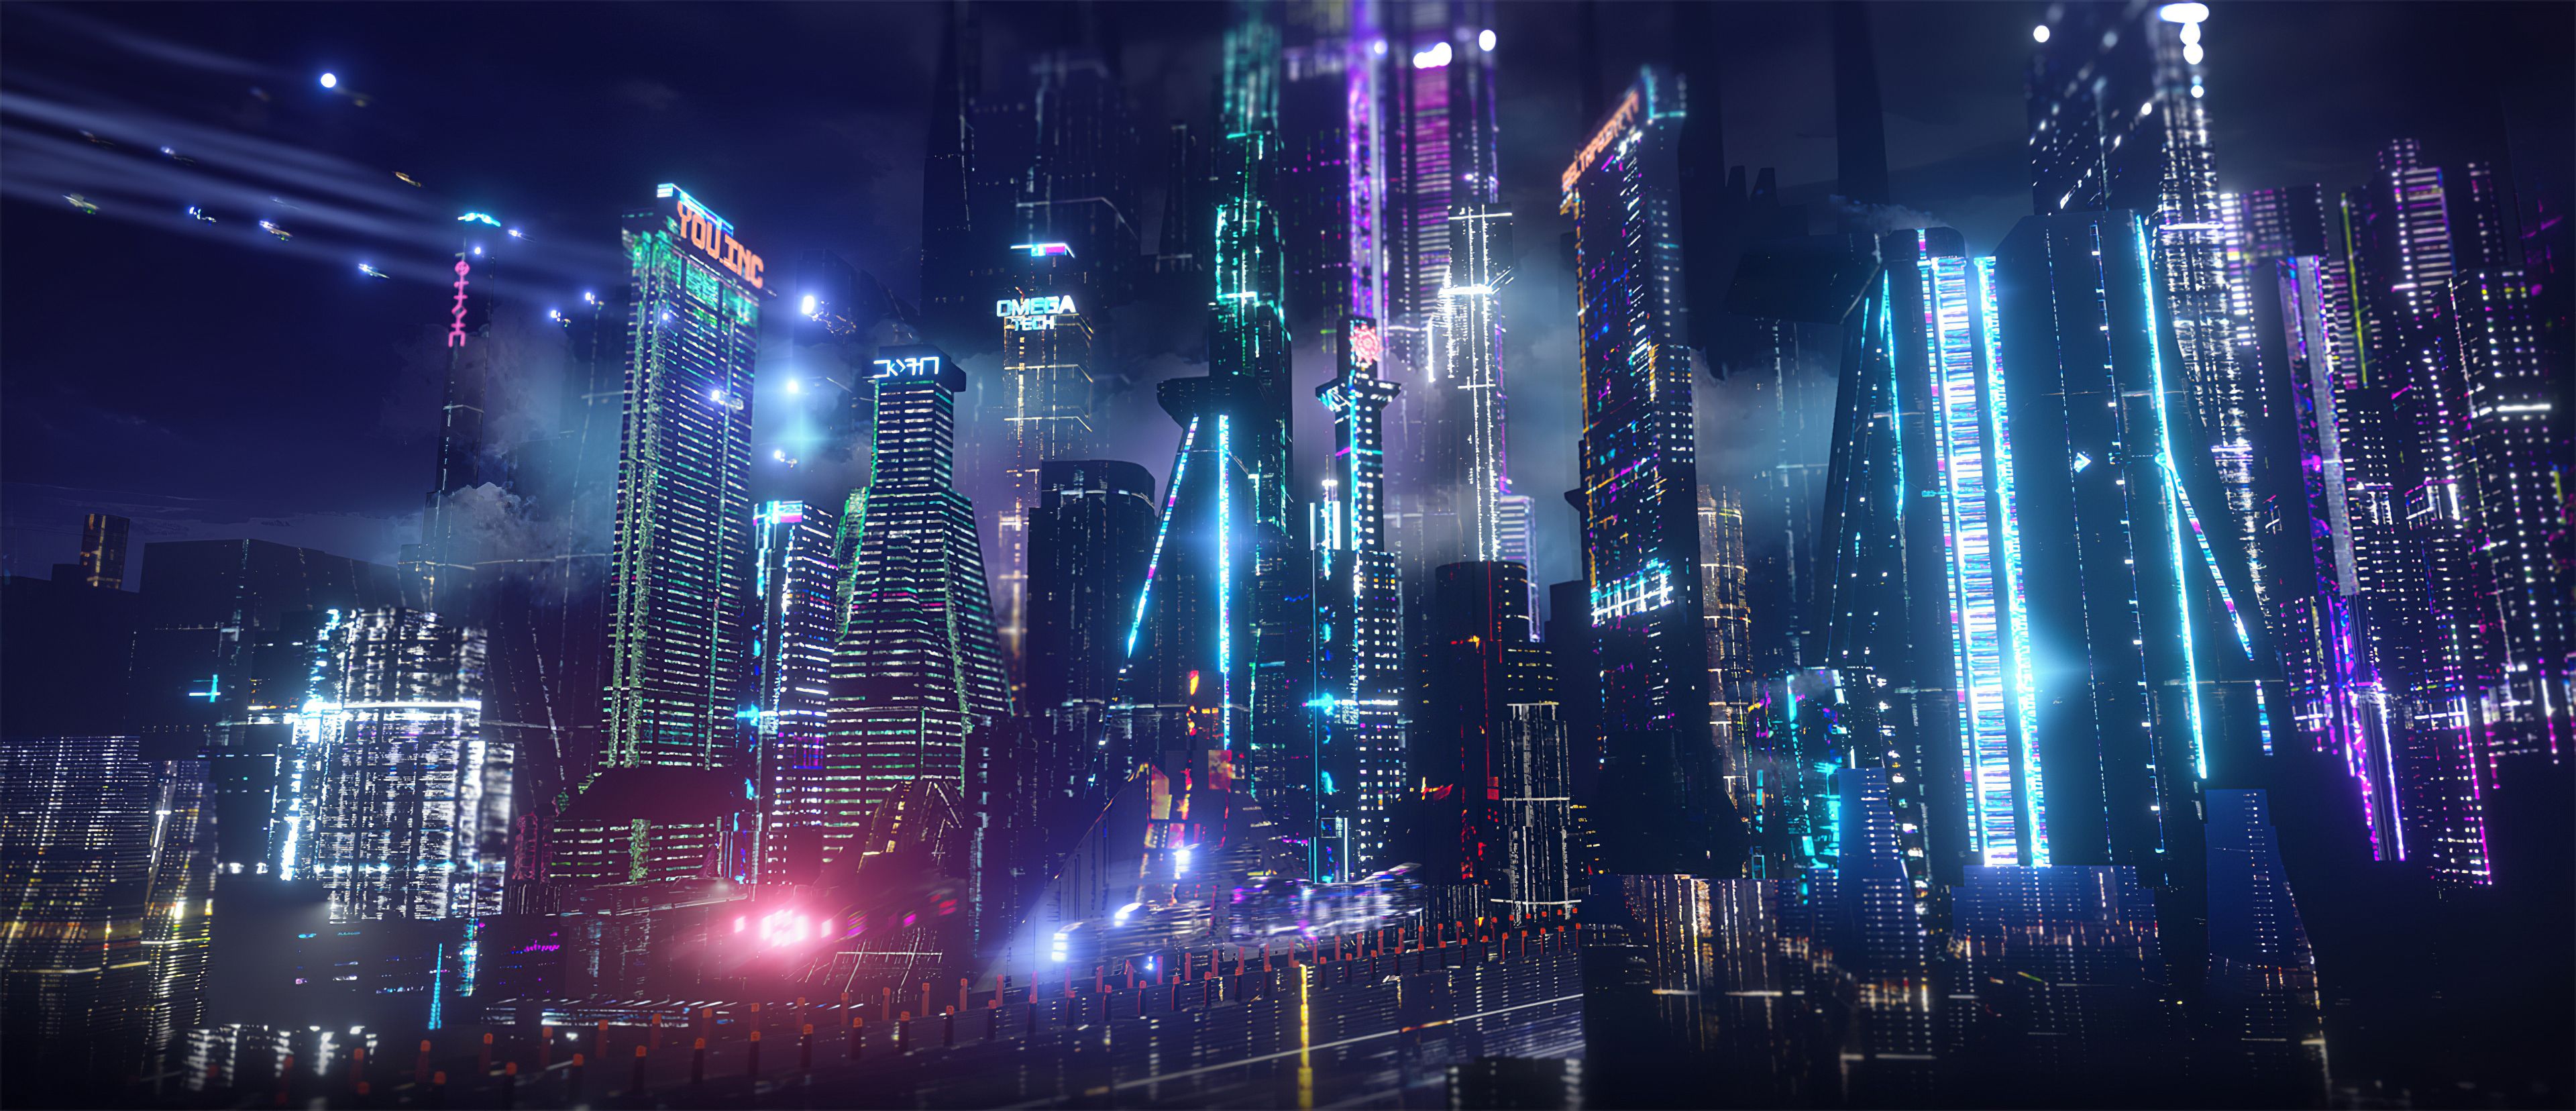 Neon City Lights 4k, HD Artist, 4k Wallpaper, Image, Background